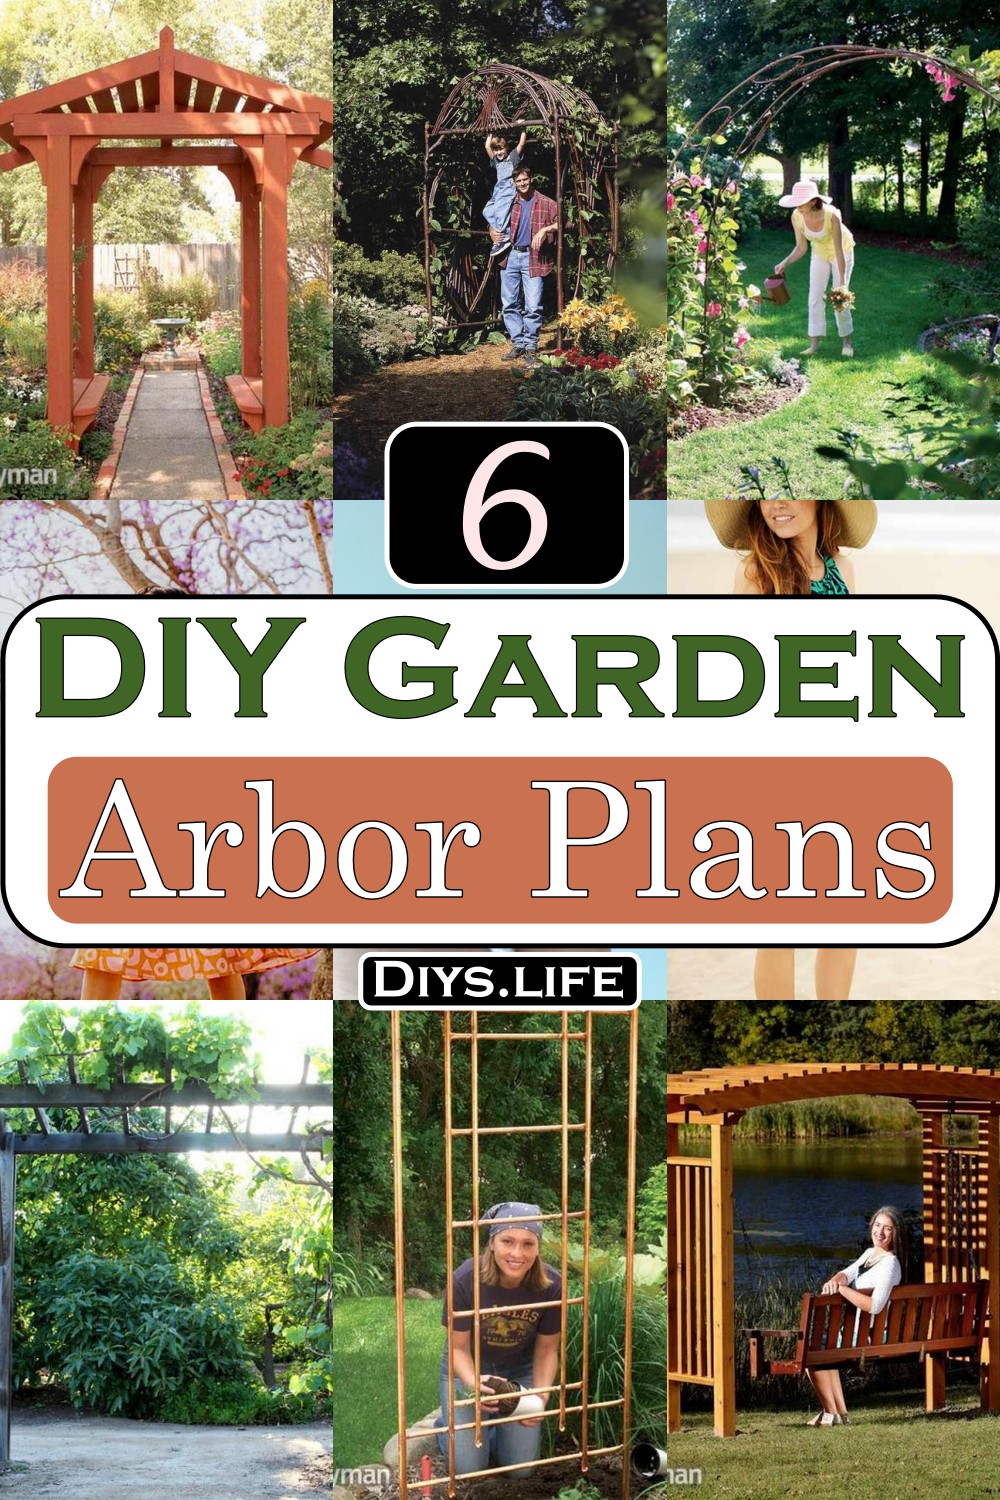 DIY Garden Arbor Plans